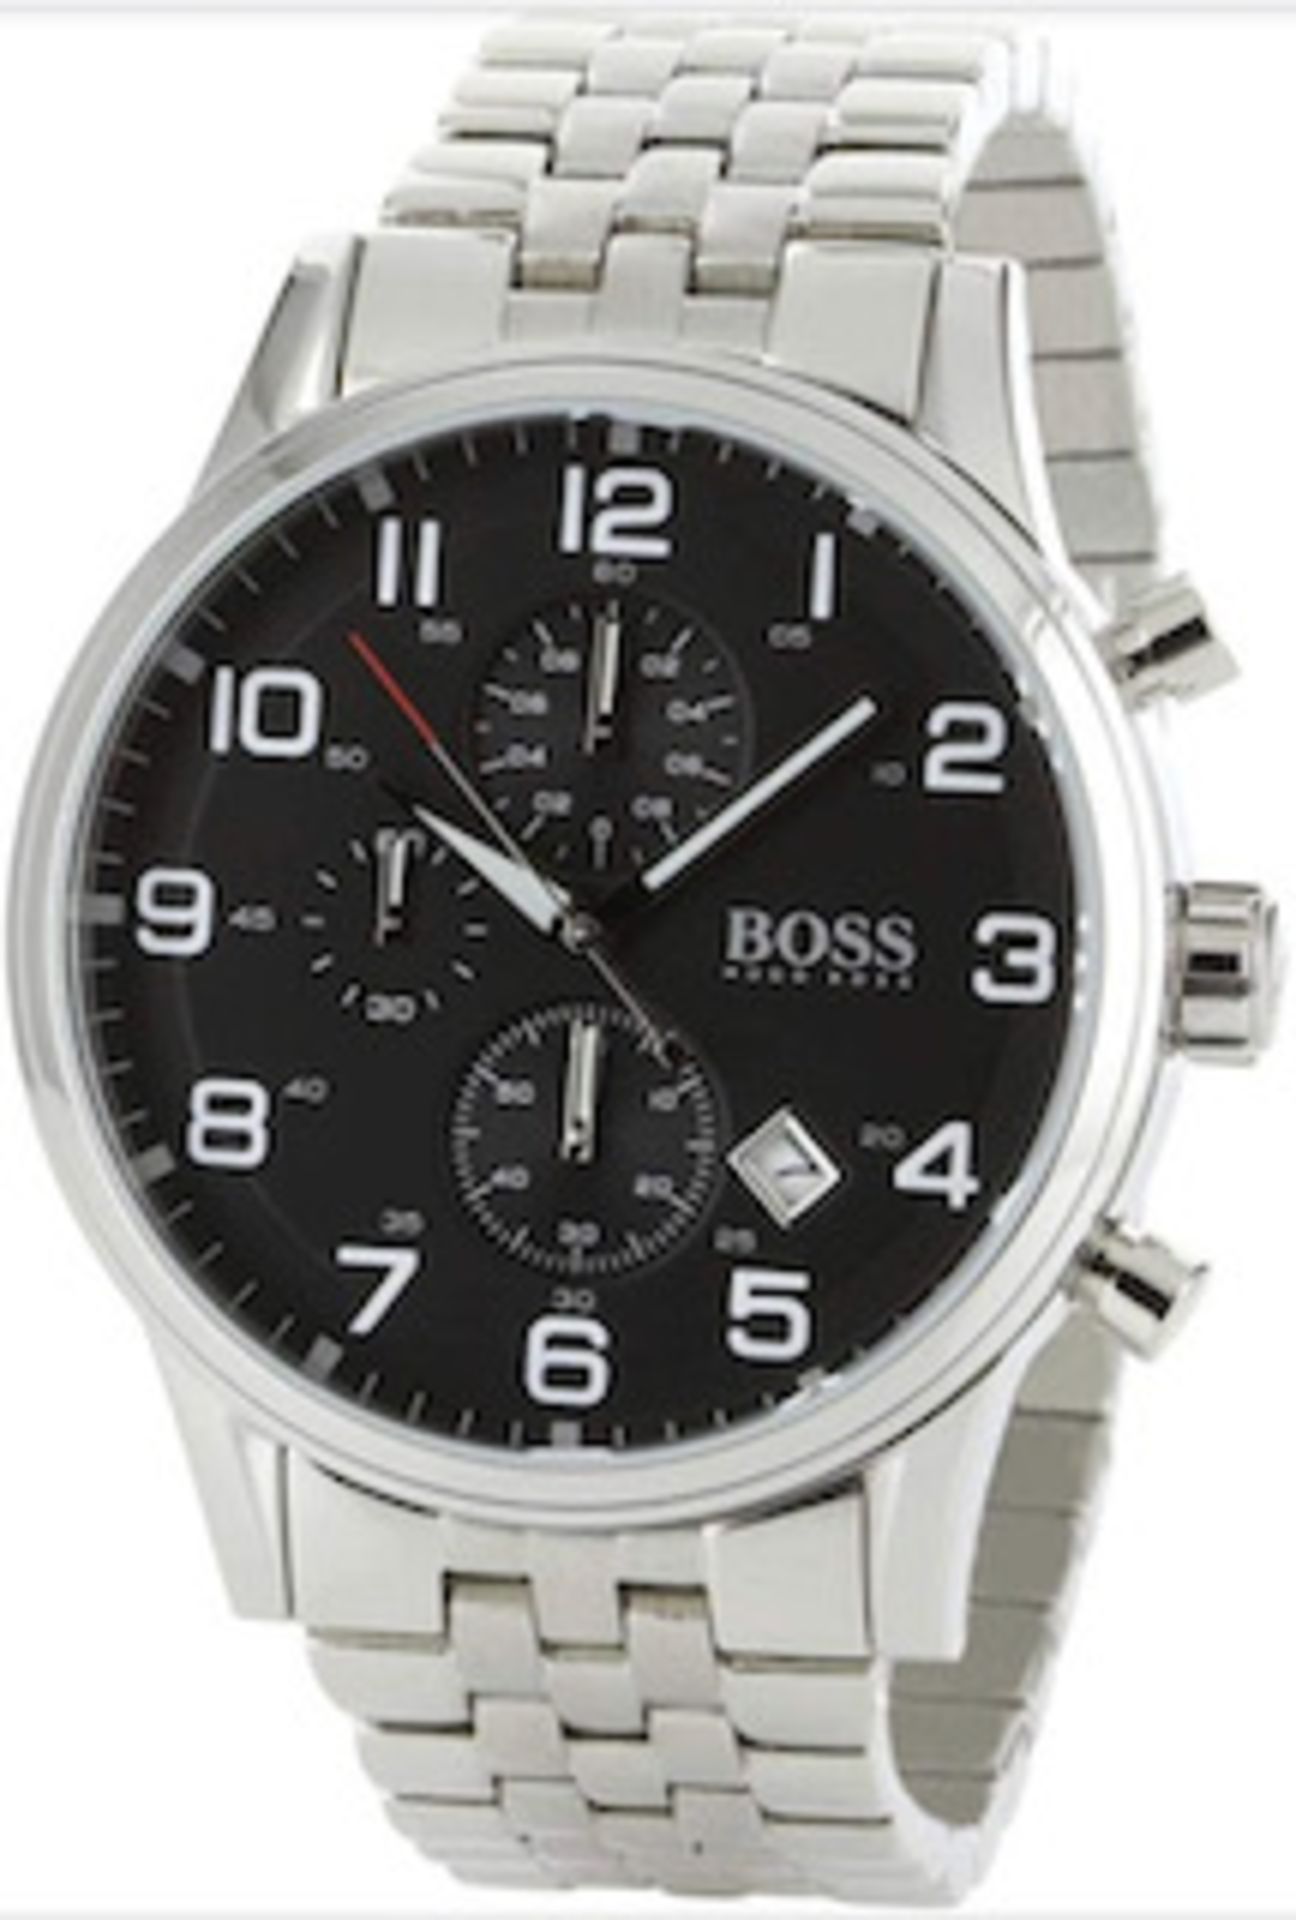 Hugo Boss 1512446 Men's Aeroliner Black Dial Silver Bracelet Chronograph Watch - Image 2 of 6